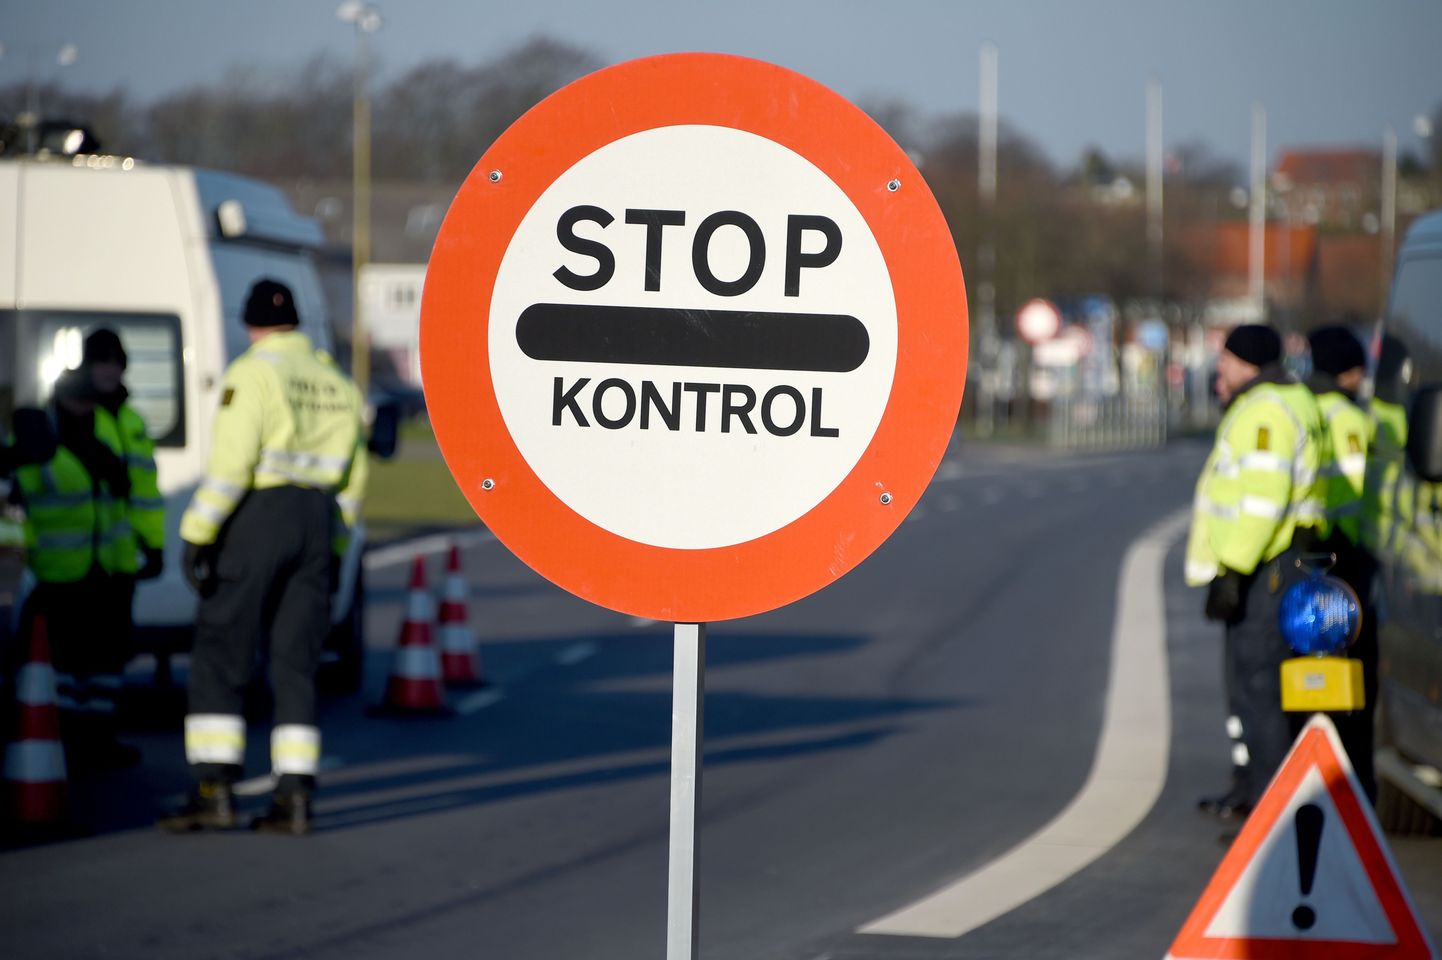 Taani politsei piirikontrolli teostamas.